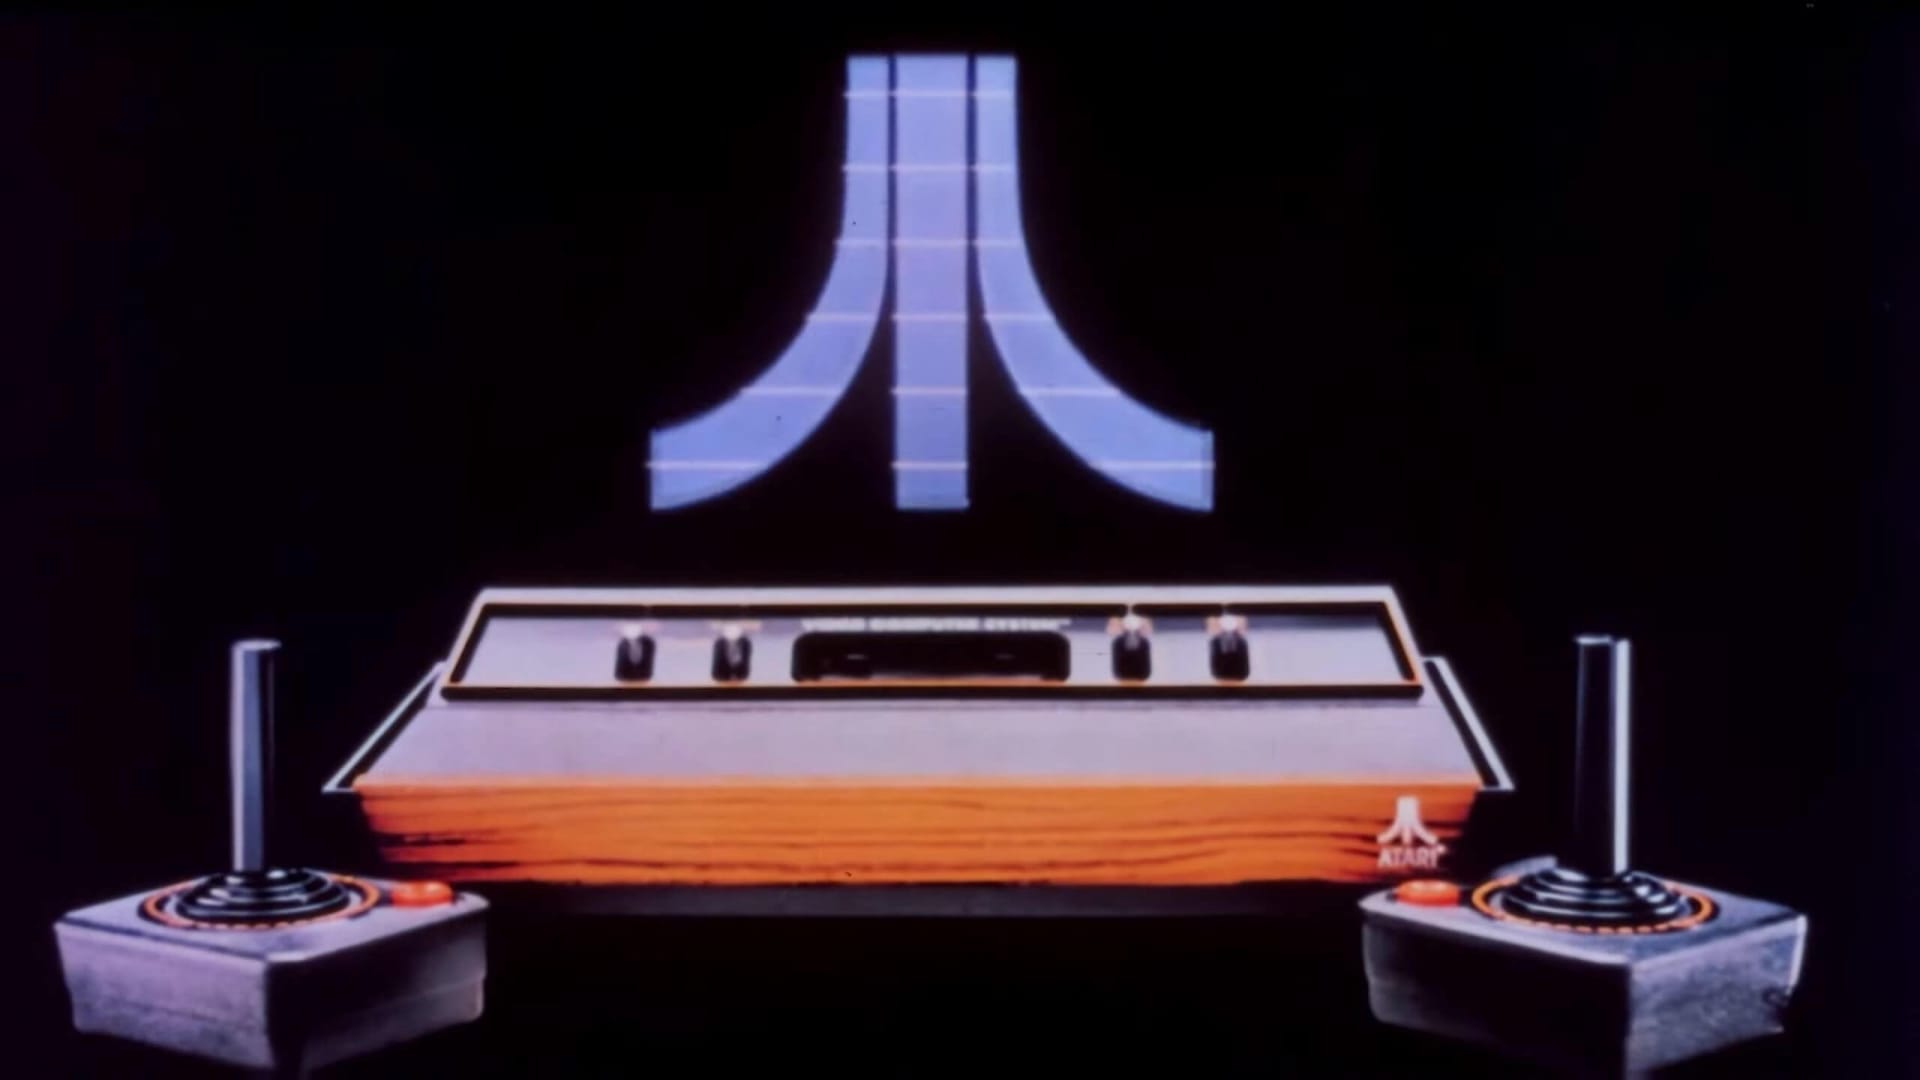 Atari CEO Offers To Buy Atari After Rough Year